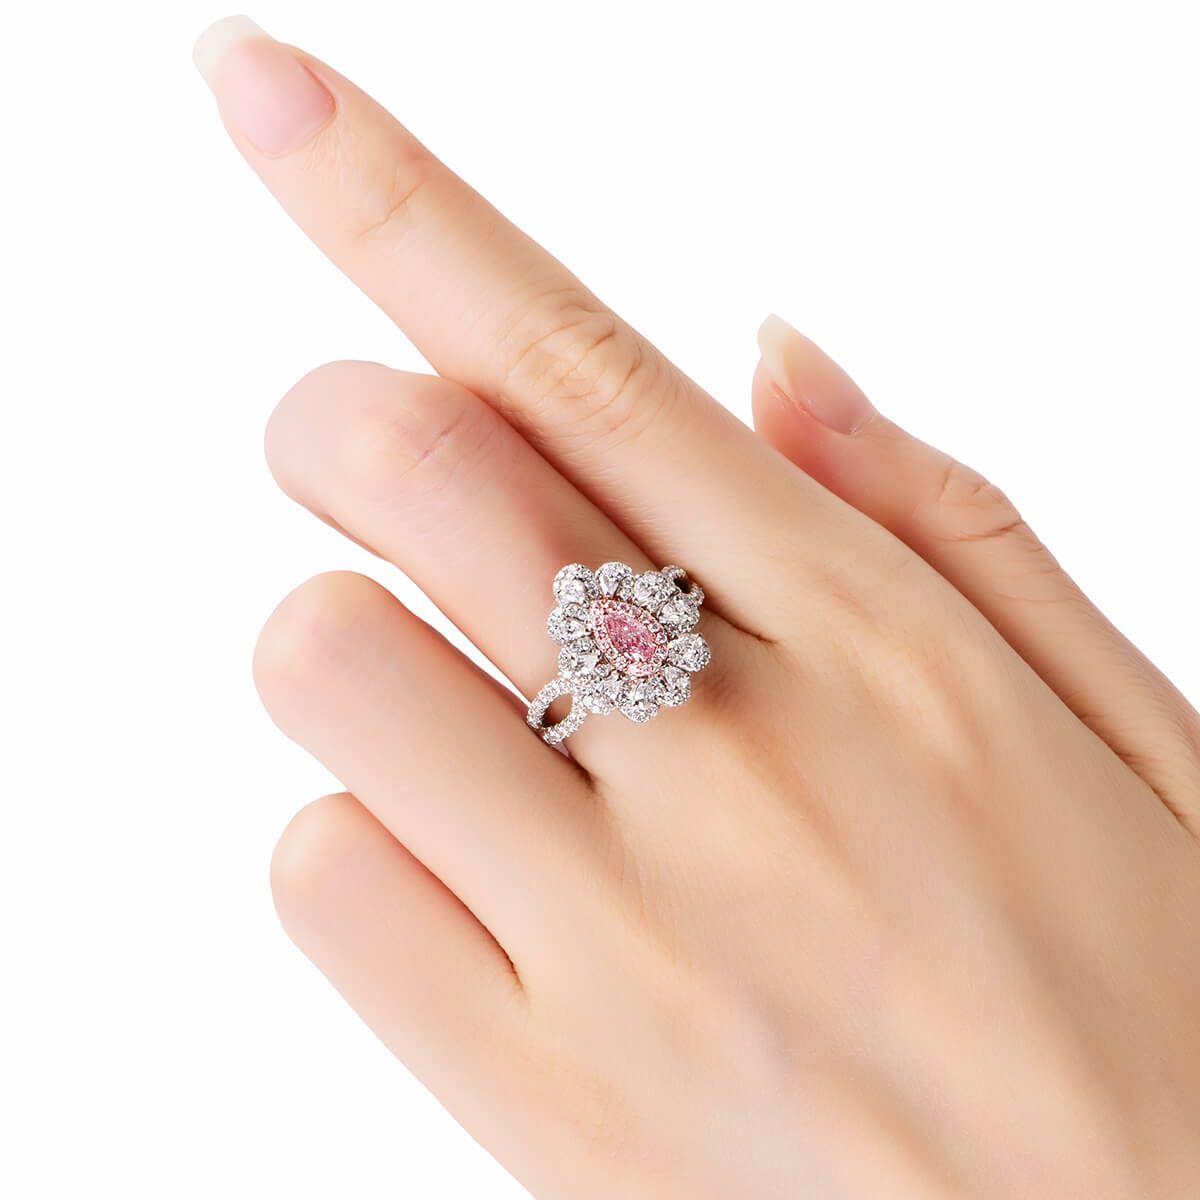 Fancy Light Pink Diamond Ring, 1.15 Ct. TW, Pear shape, GIA Certified, 2193197042